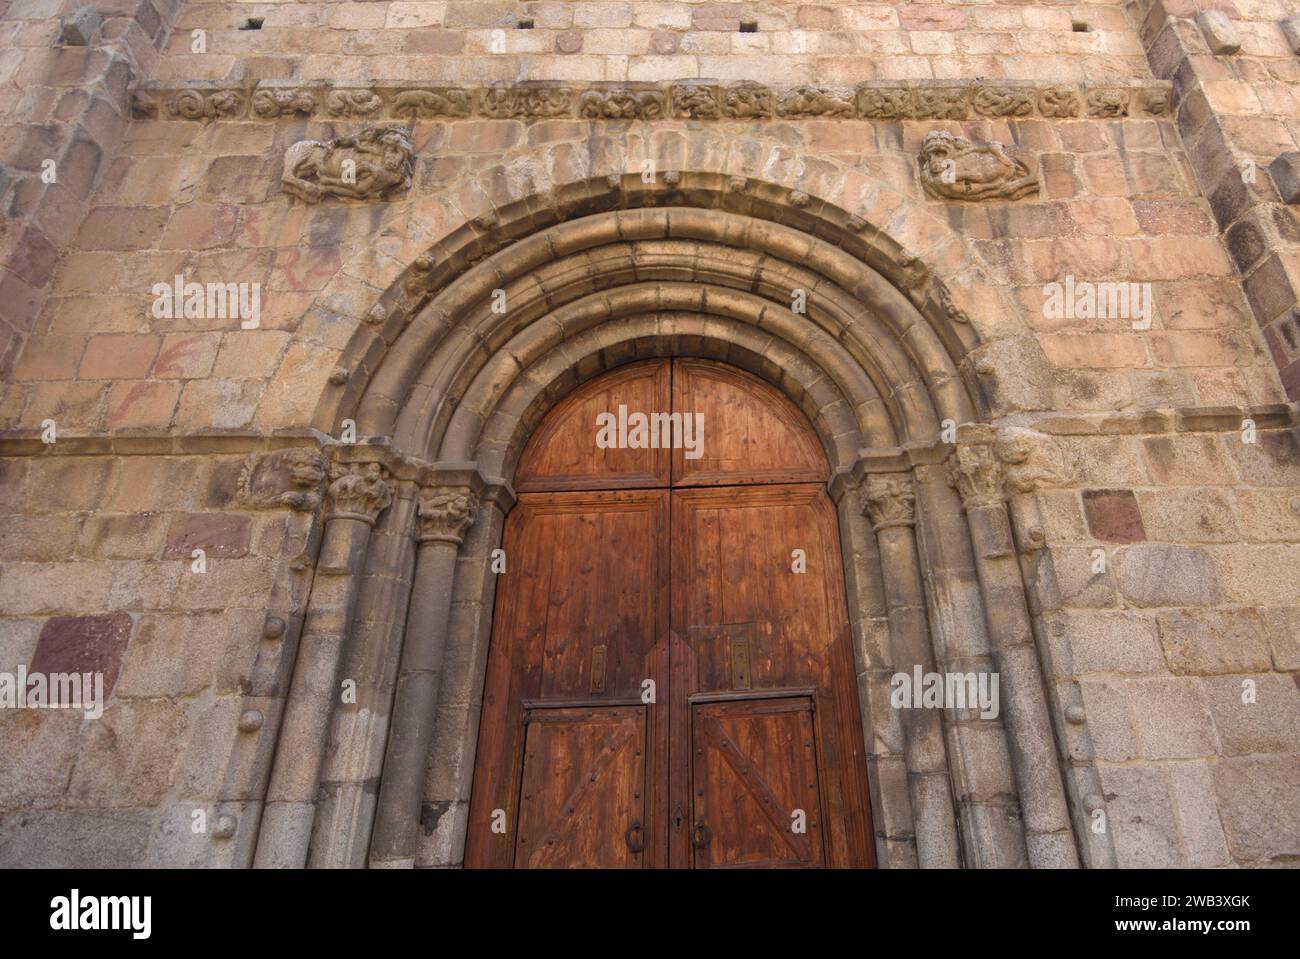 Porte de la cathédrale Santa Maria d’Urgell, la Seu d’Urgell, province de Lleida, Catalogne, Espagne Banque D'Images